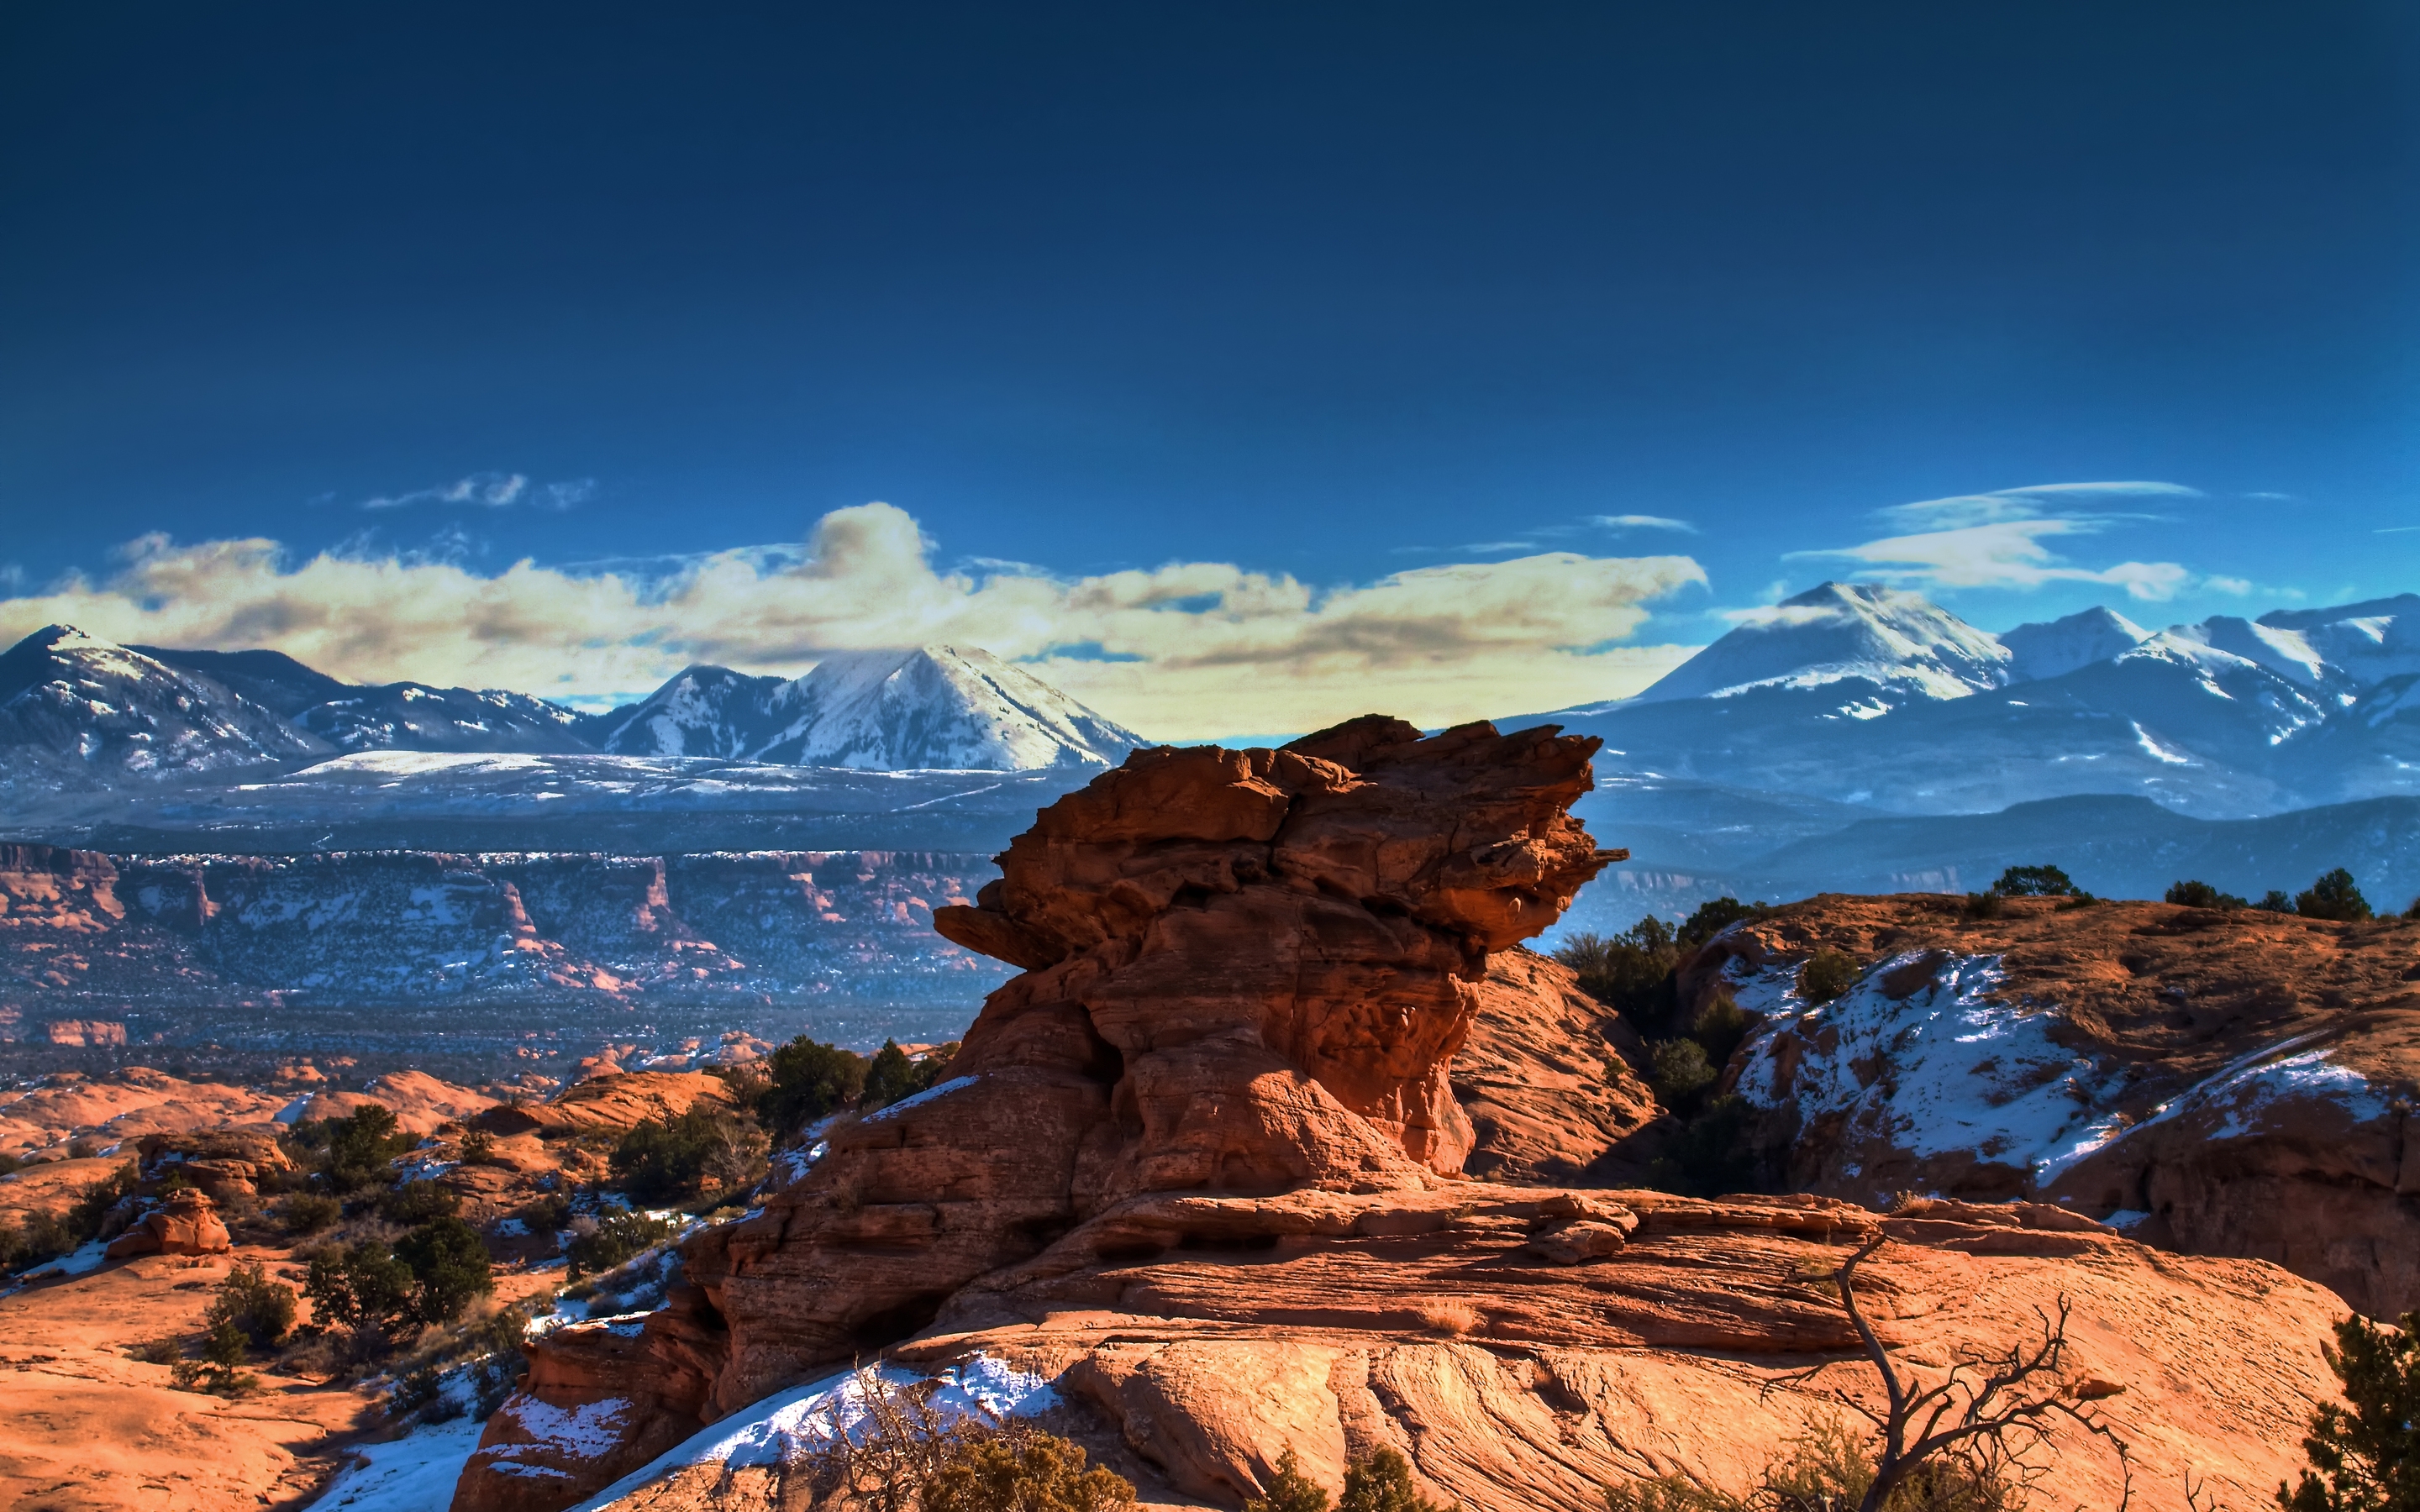 Moab Utah Mountains for 2880 x 1800 Retina Display resolution